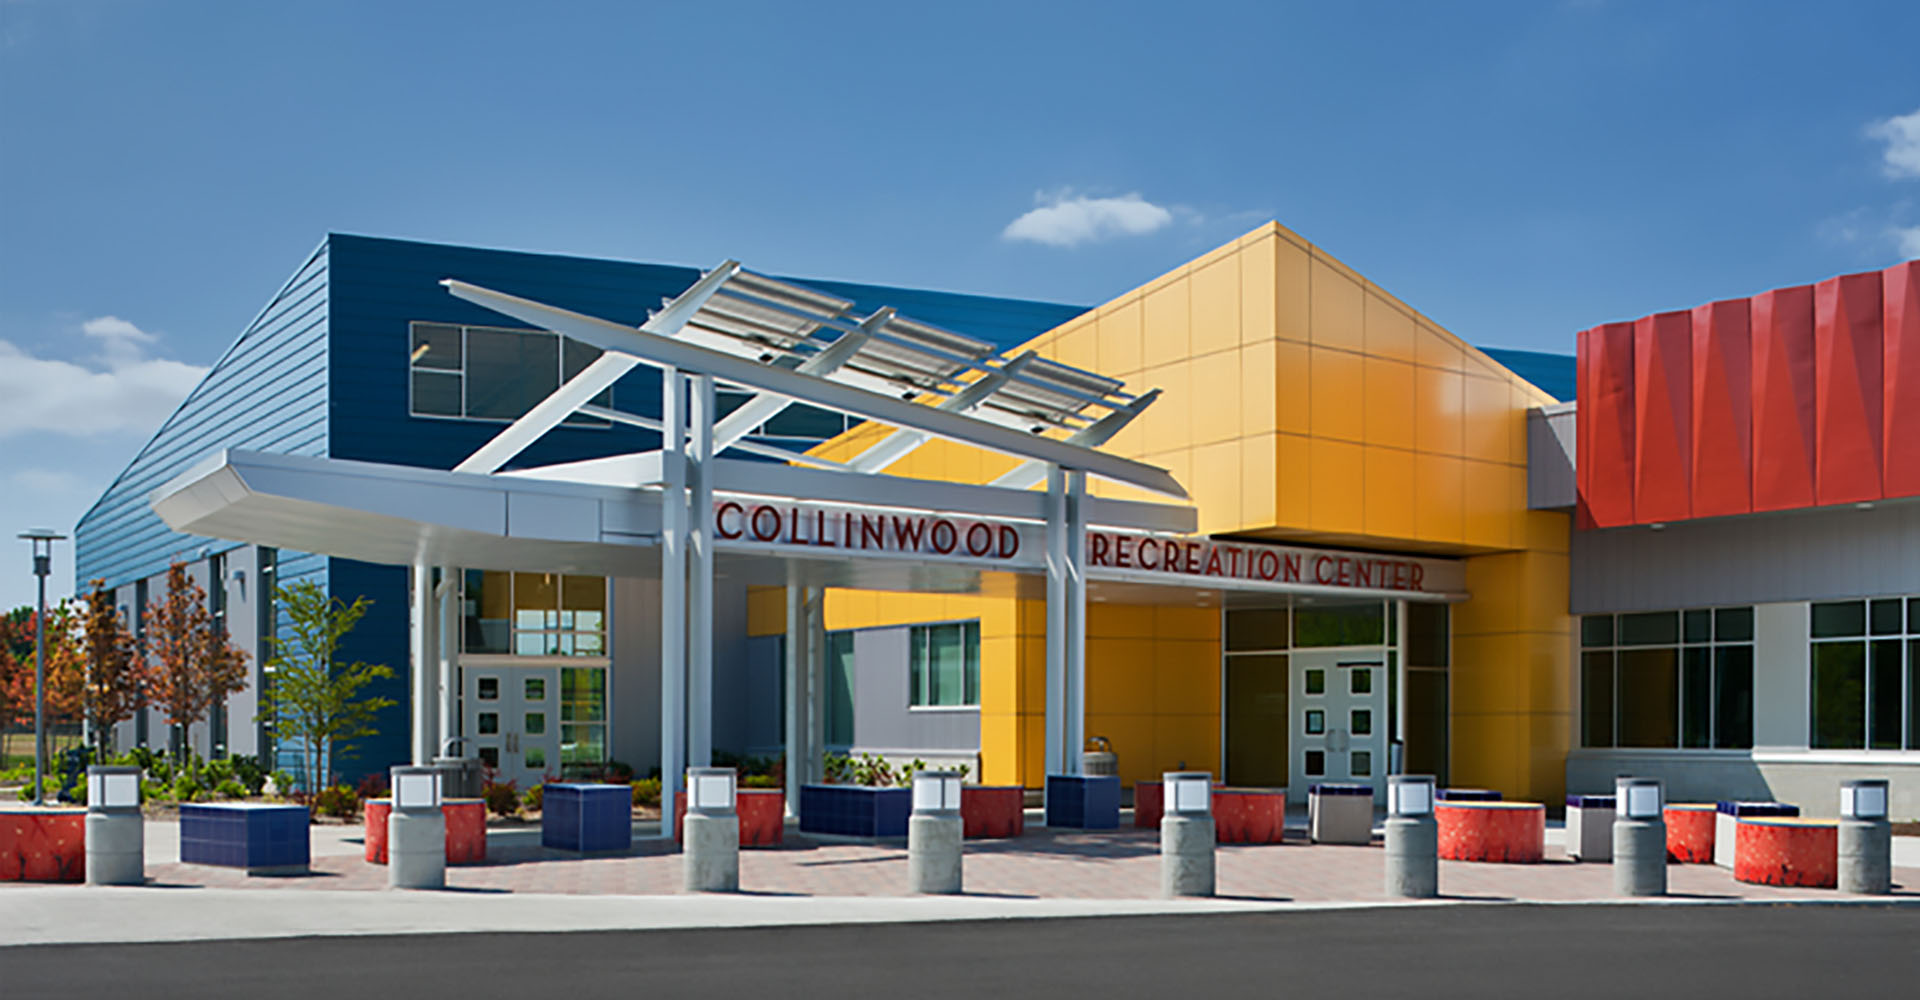 Collinwood Recreation Center